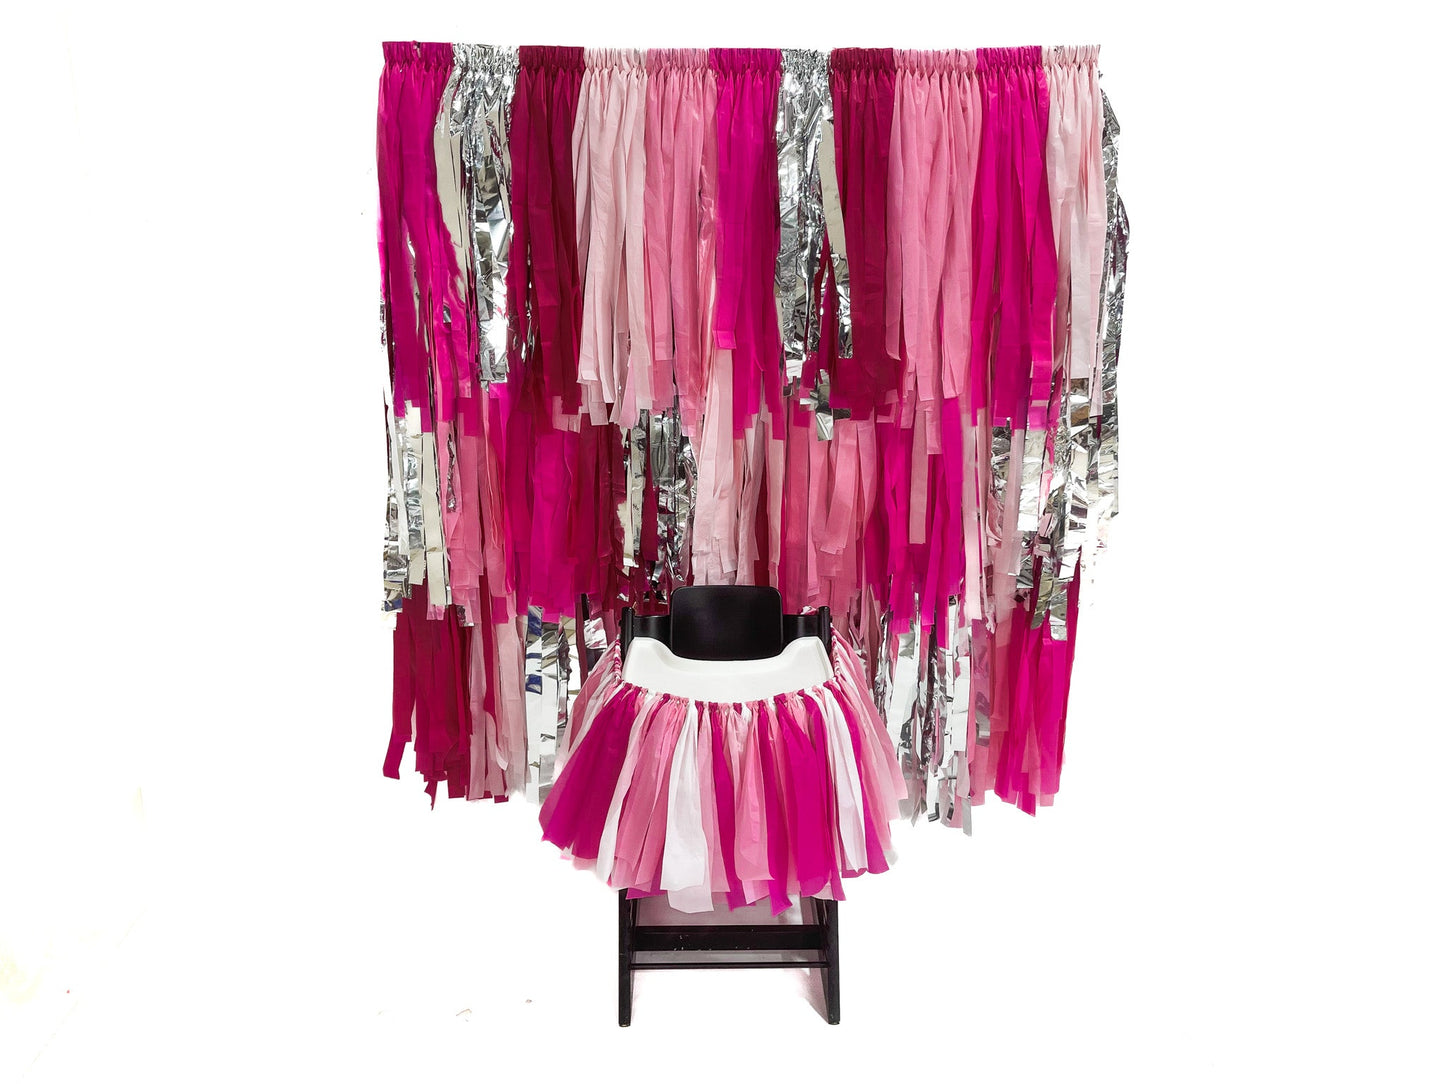 CUSTOM Fringe High Chair Skirt - Oh My Darling Party Co-custom #Fringe_Backdrop#